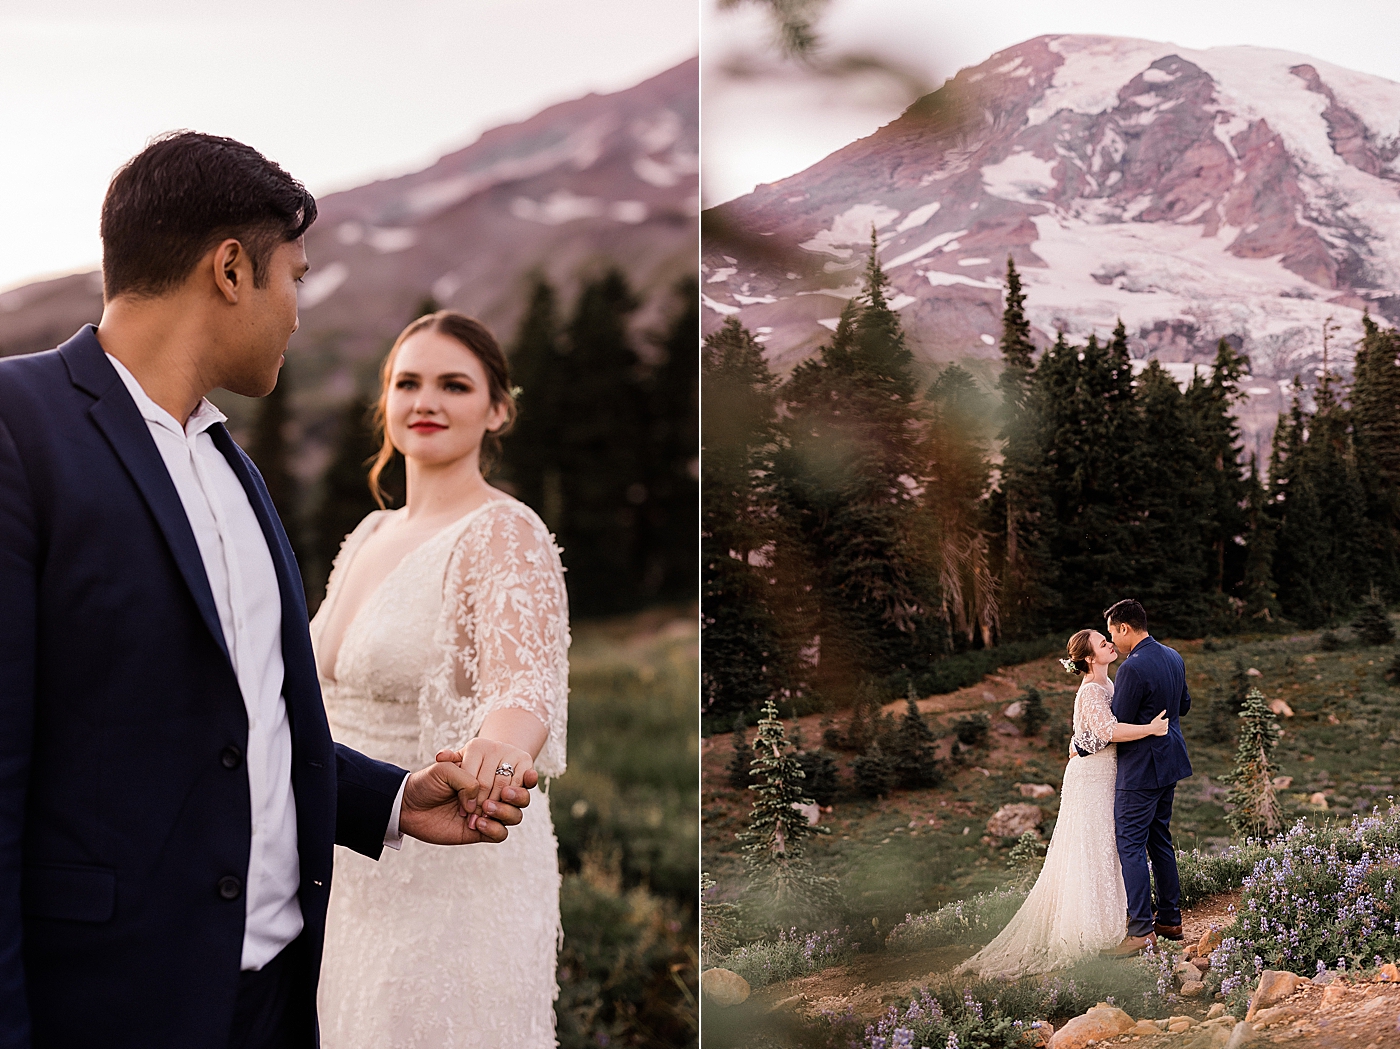 Sunset portraits at Mount Rainier during elopement. Photo by Megan Montalvo Photography.